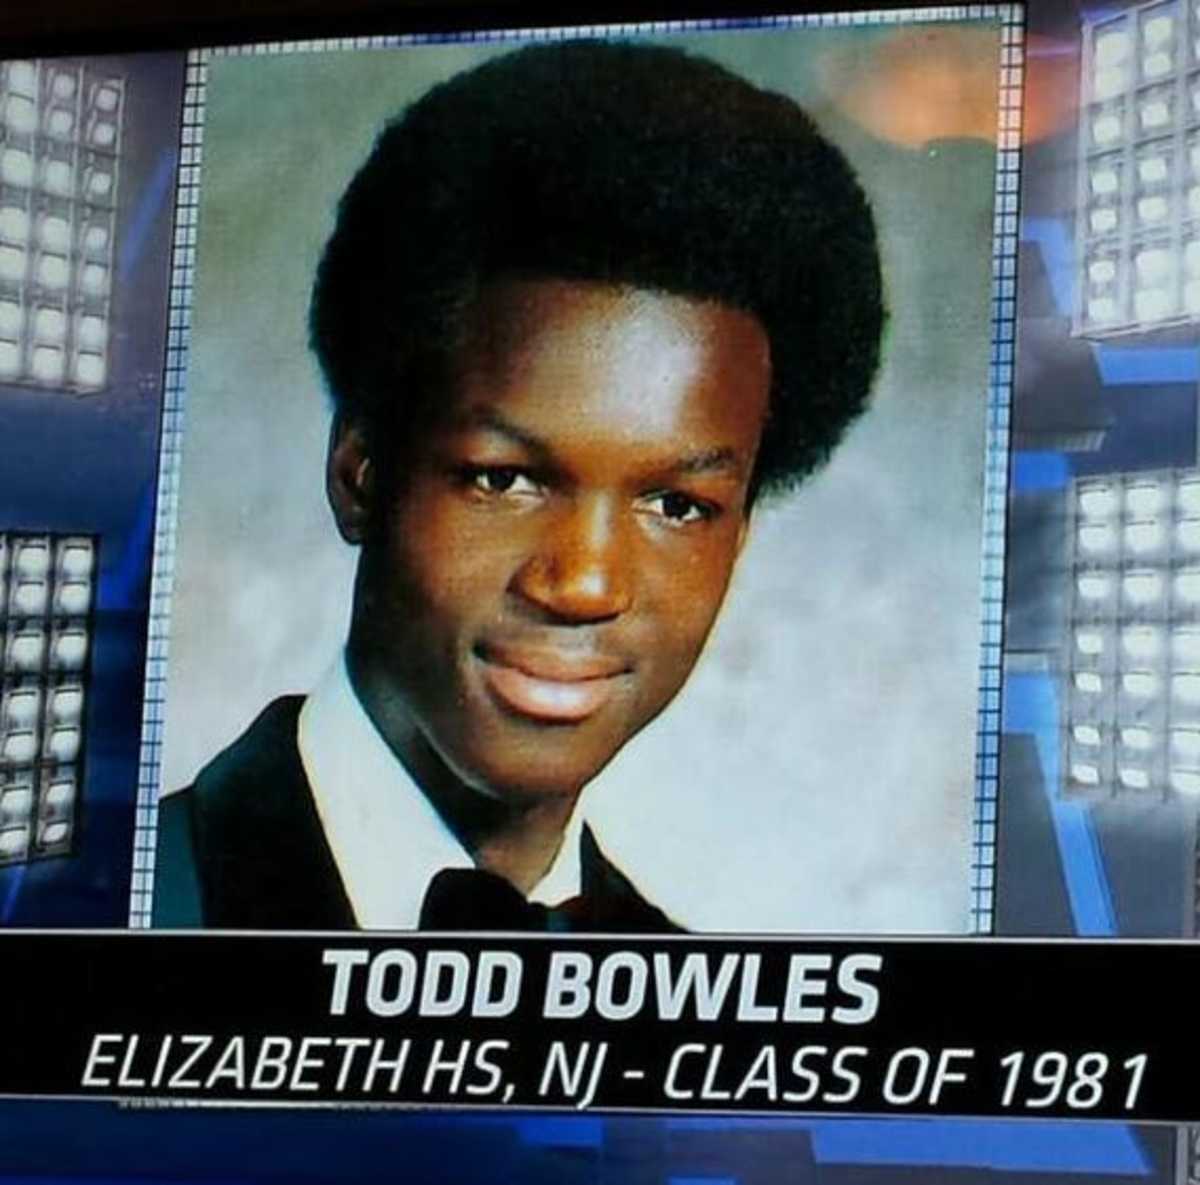 Todd Bowles in High School